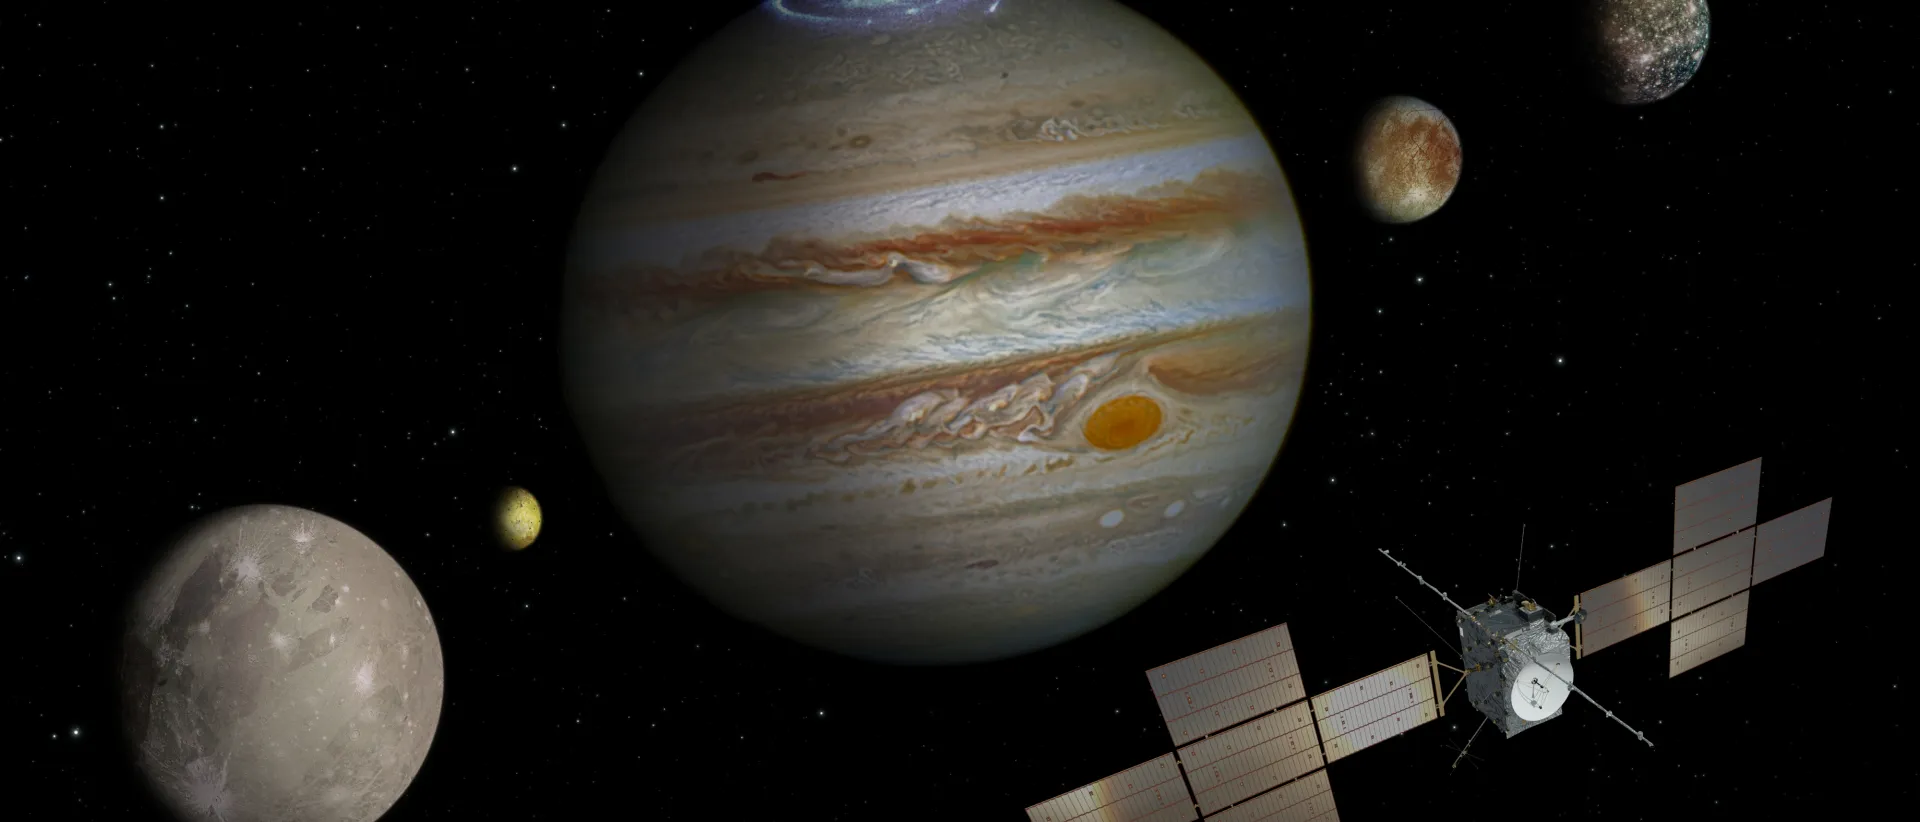 Jupiter and its moons (c) spacecraft: ESA/ATG medialab; Jupiter: NASA/ESA/J. Nichols (University of Leicester); Ganymede: NASA/JPL; Io: NASA/JPL/University of Arizona; Callisto and Europa: NASA/JPL/DLR